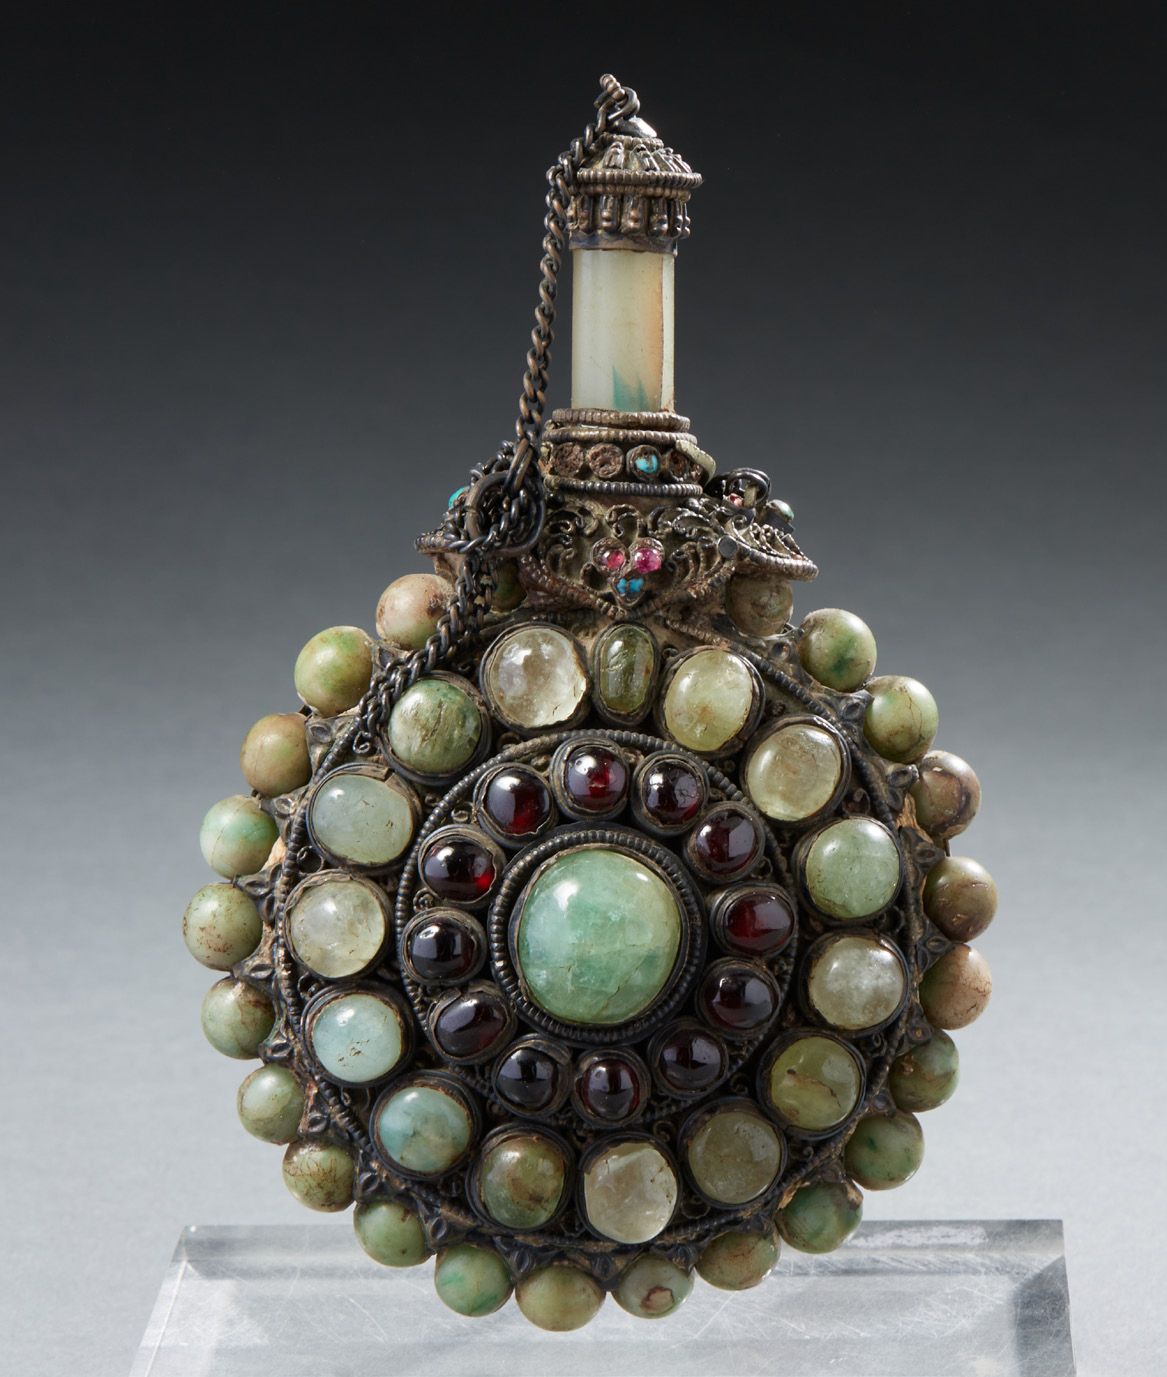 HIMALAYA ou TIBET 镀银朝圣者酒壶，镶嵌凸圆形绿色玉石，与岩石晶体和碧玺交替使用 19世纪末-20世纪初 高：16.5厘米